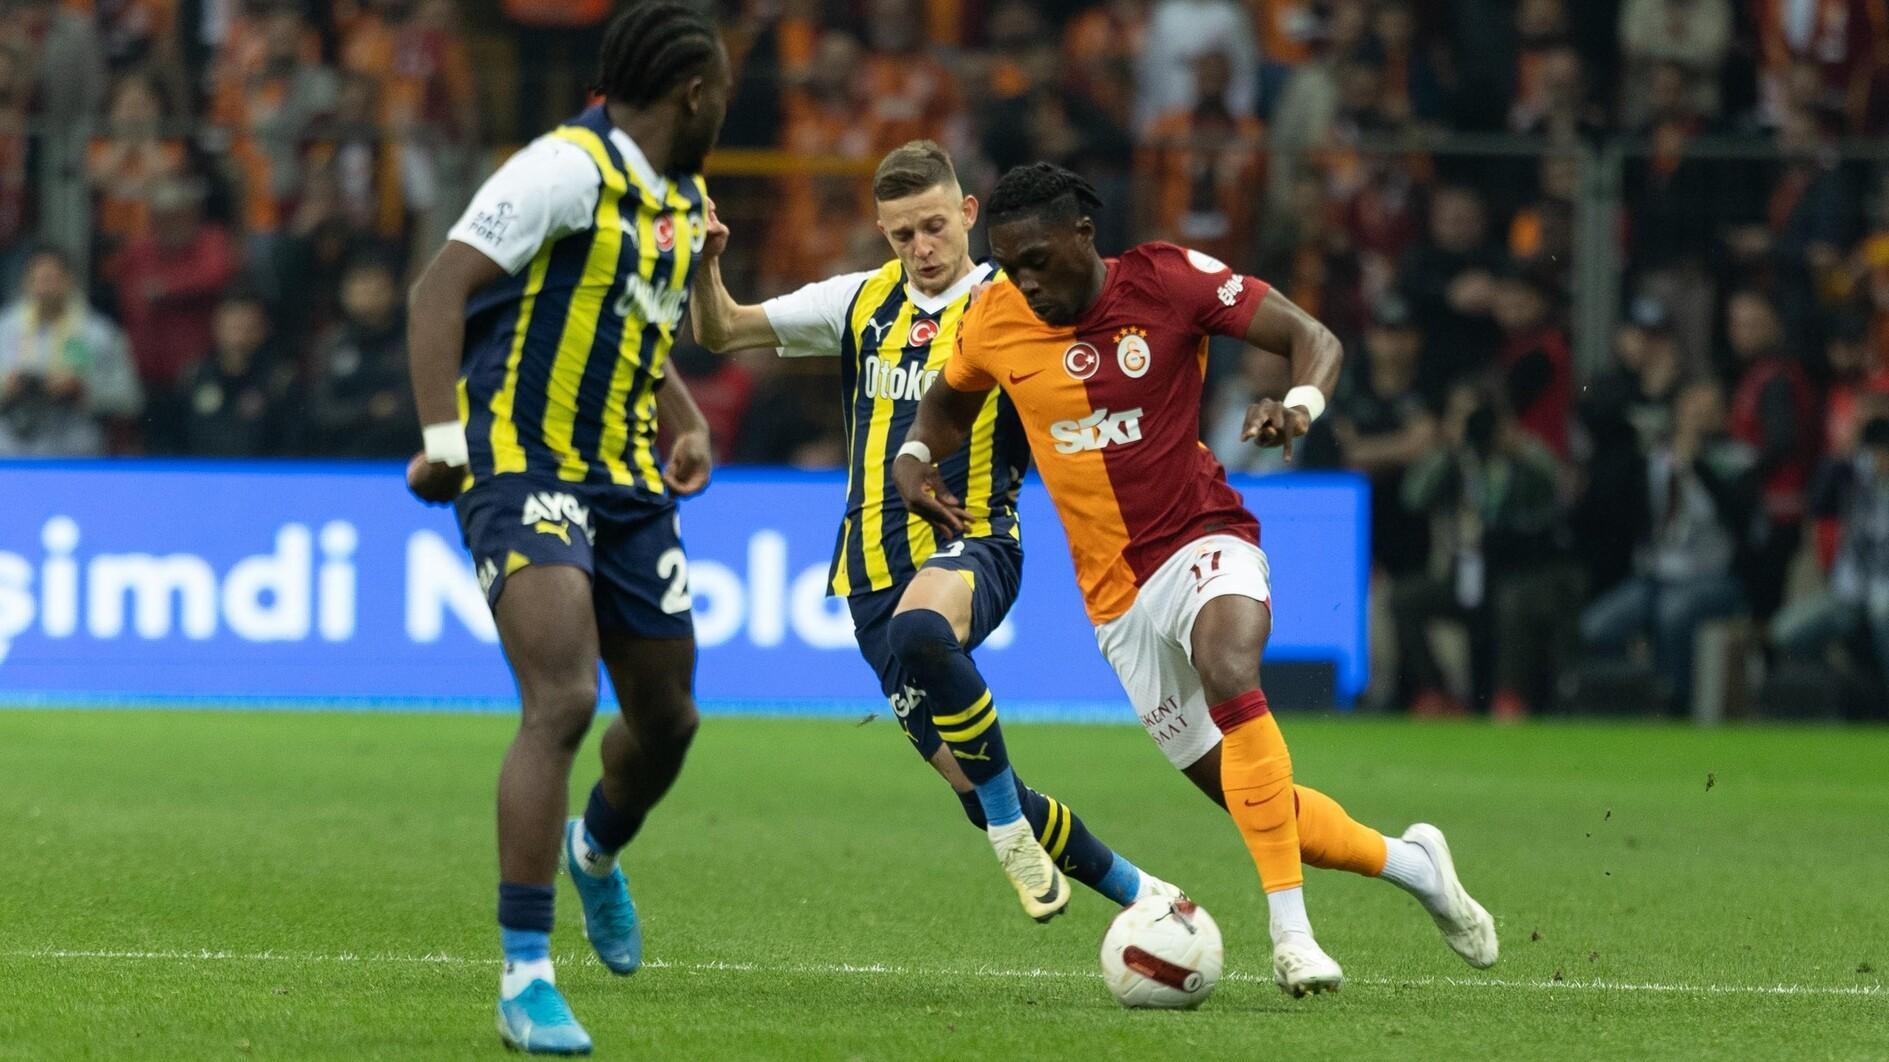 Fenerbahçe verslaat aartsrivaal en verlengt titelrace